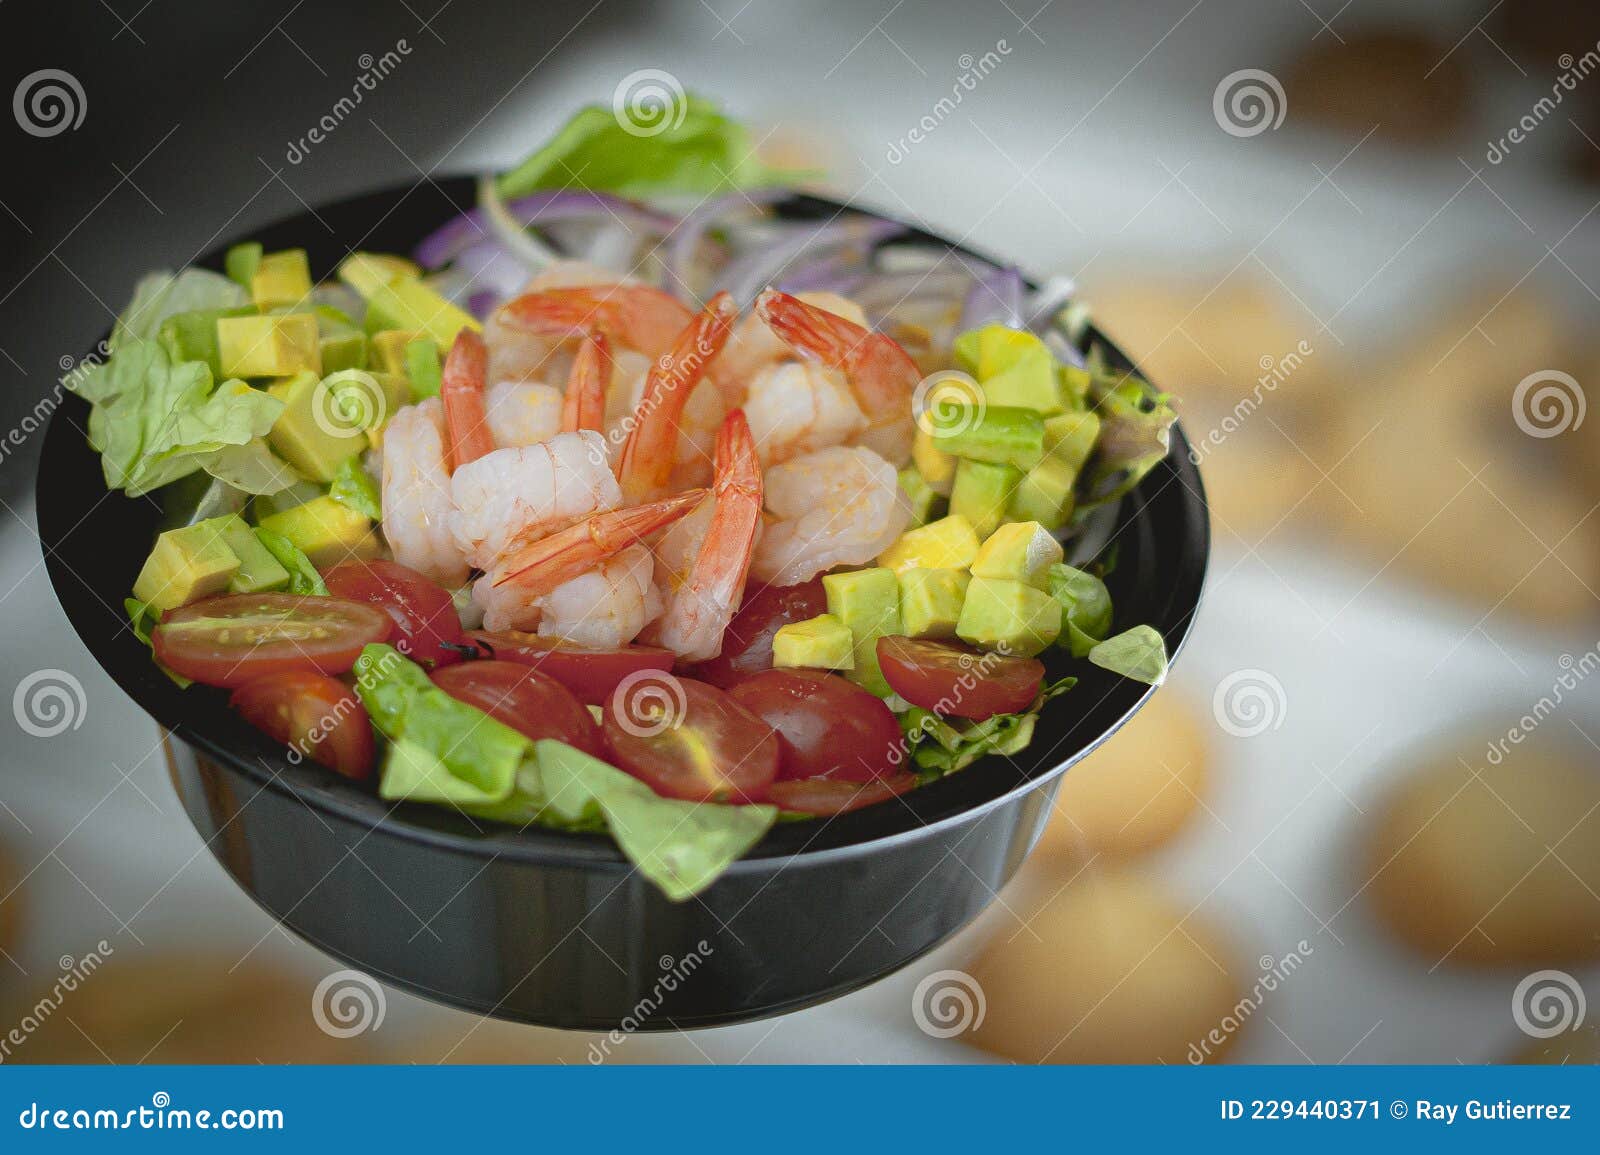 shrimp salad bowls ensalada de camarones